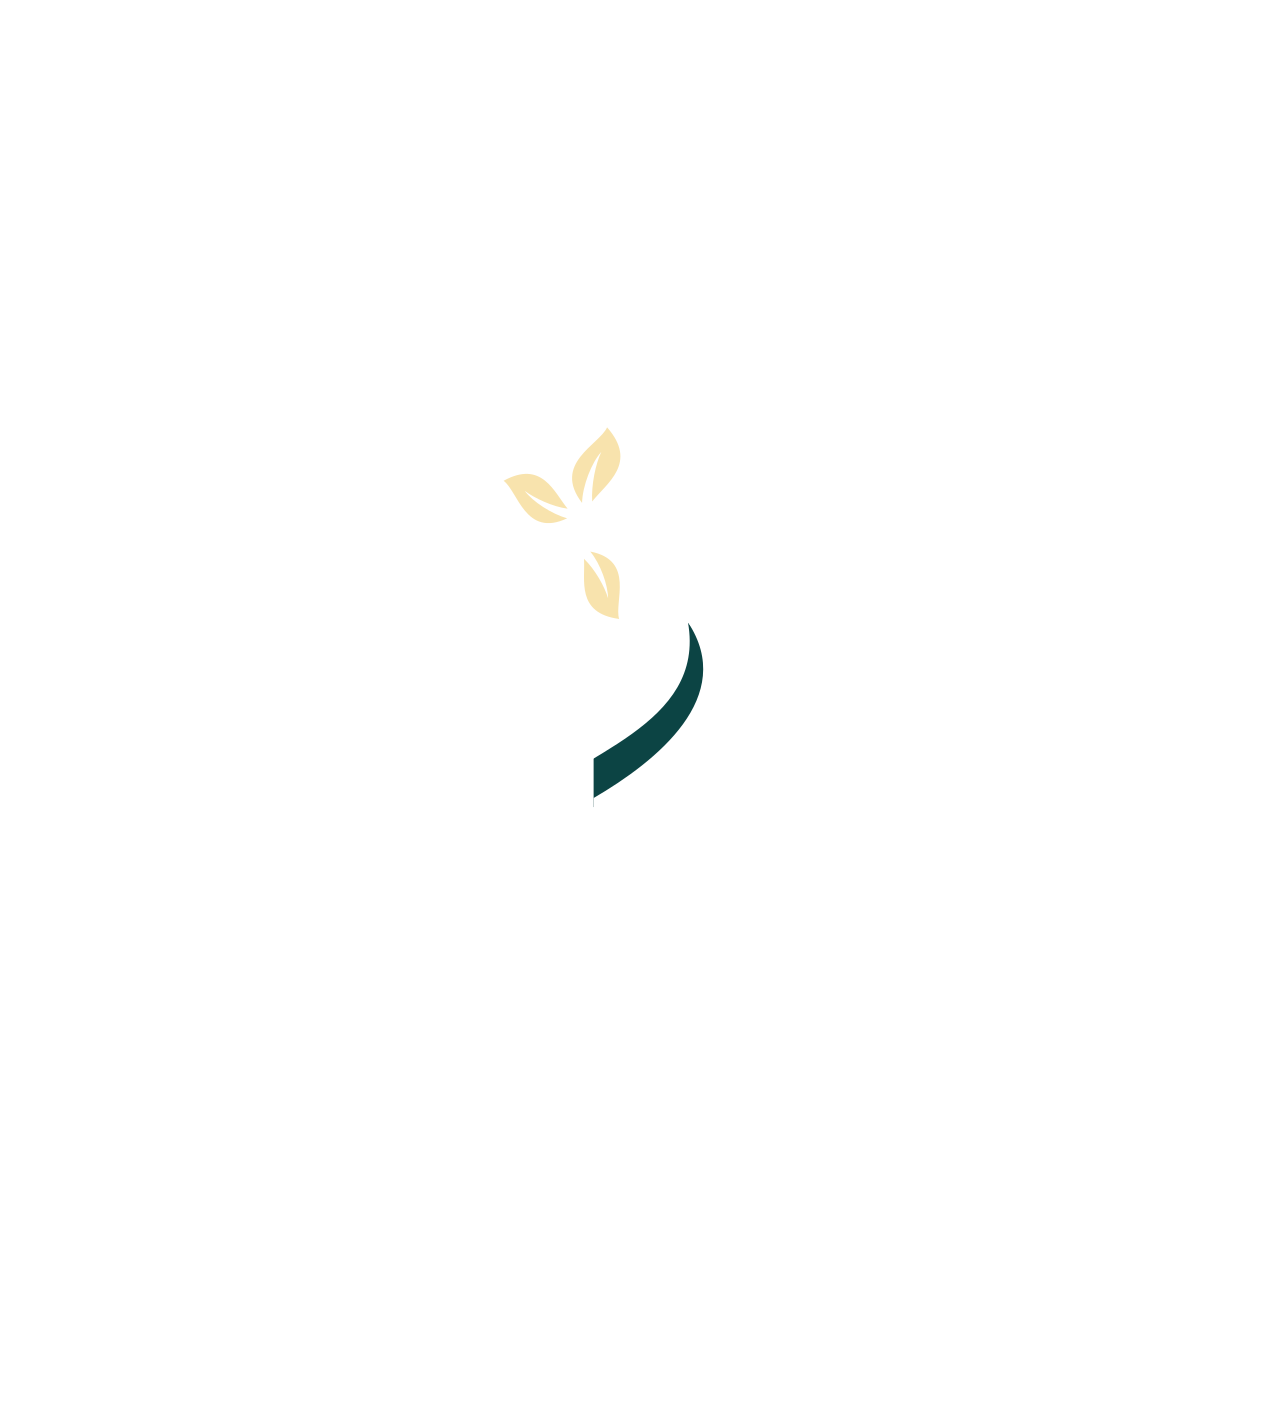 NATIONAL TIMED PATTERN RACING ASSOCIATION's logo